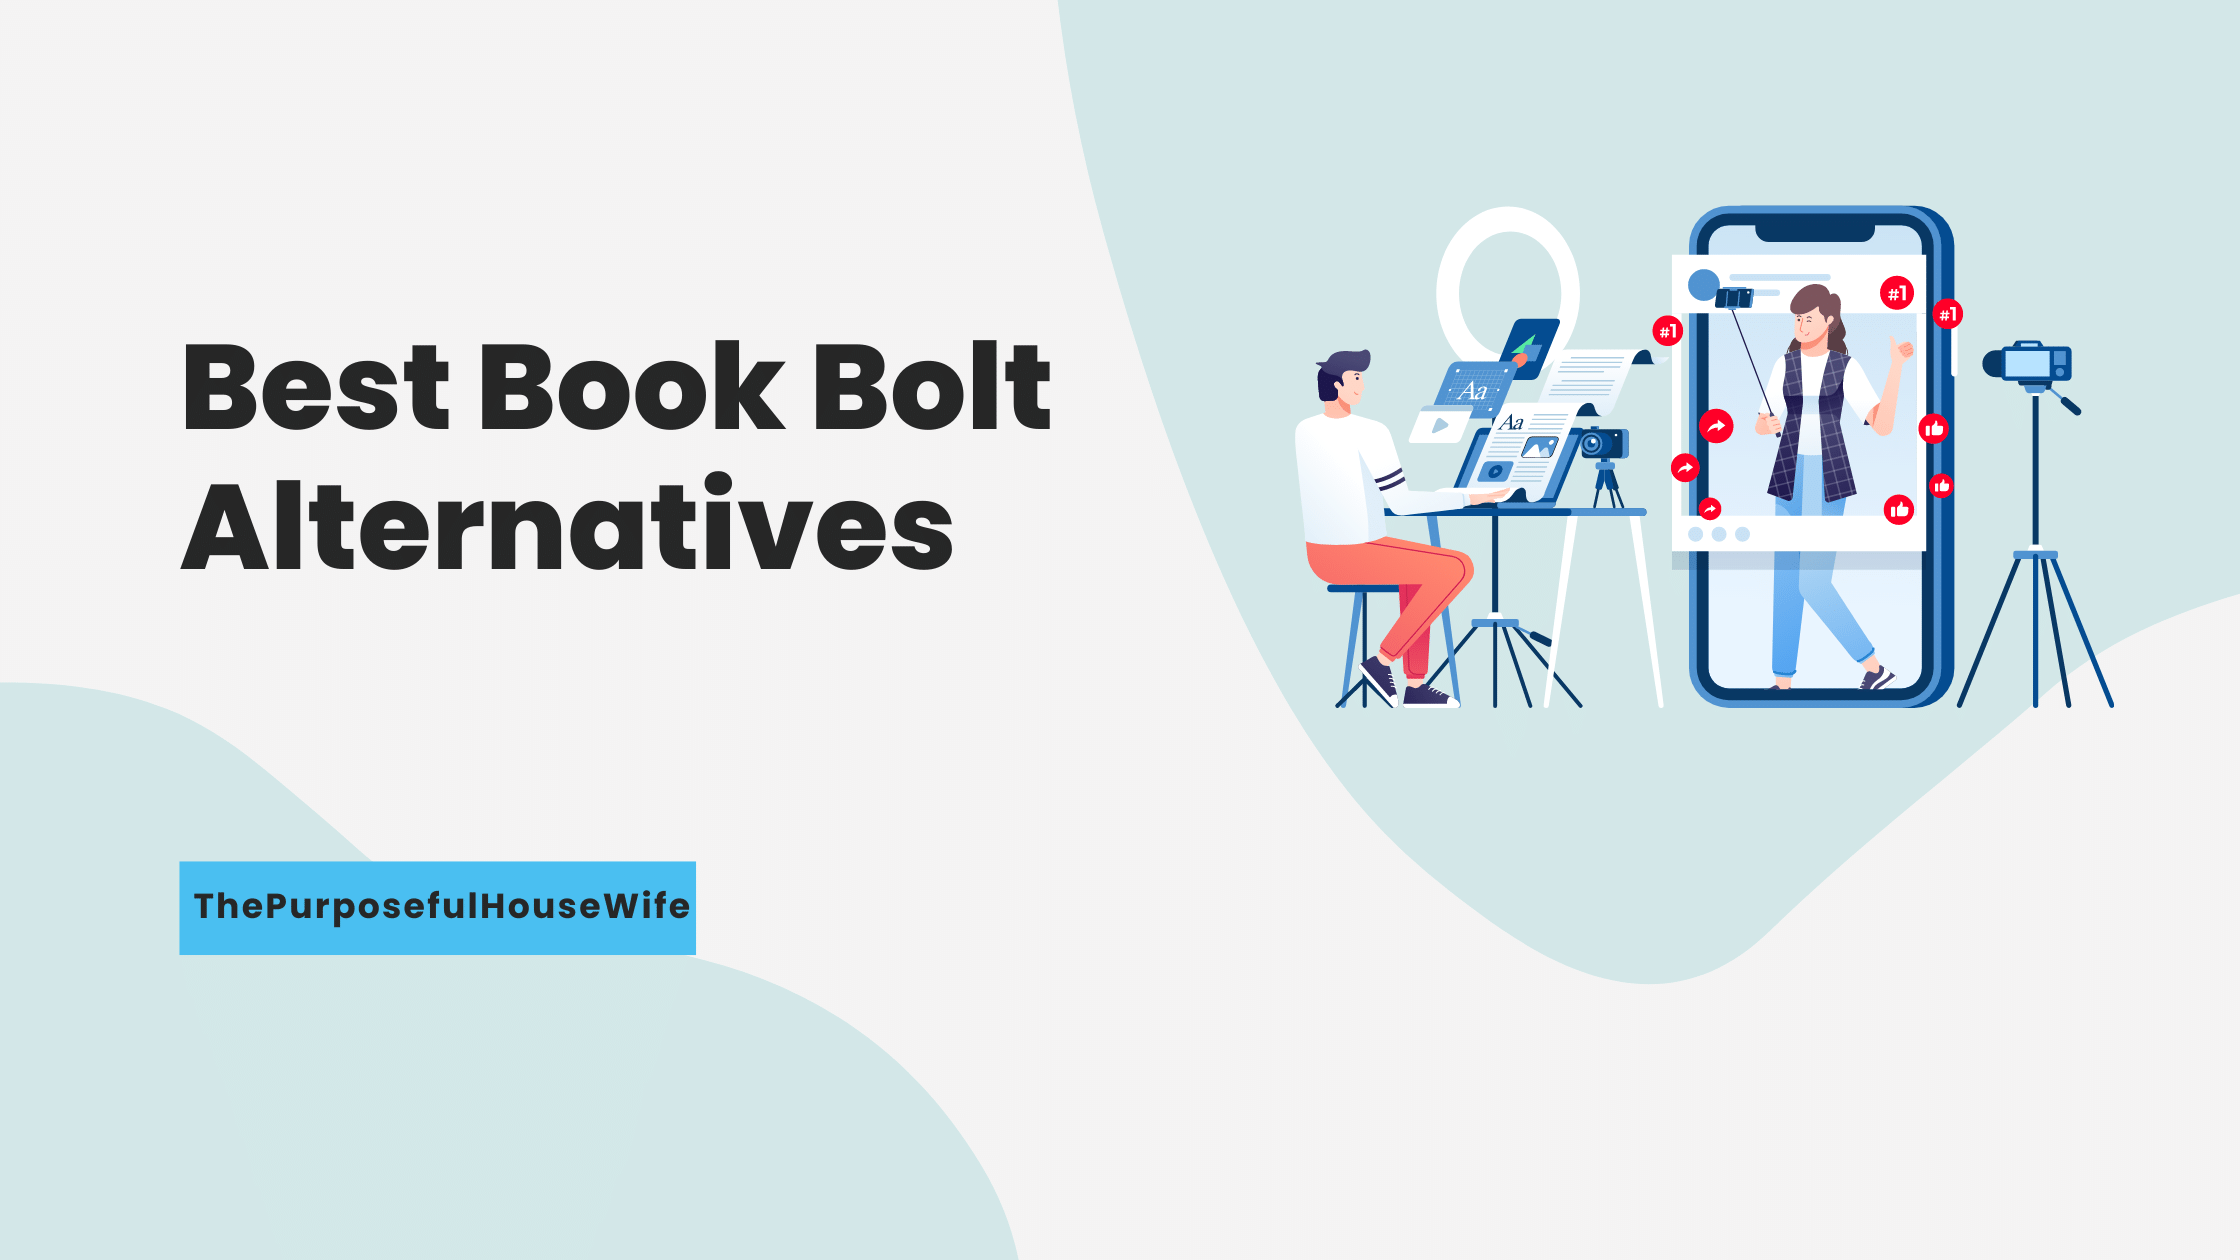 Best Book Bolt Alternatives - The PurposefulHouseWife